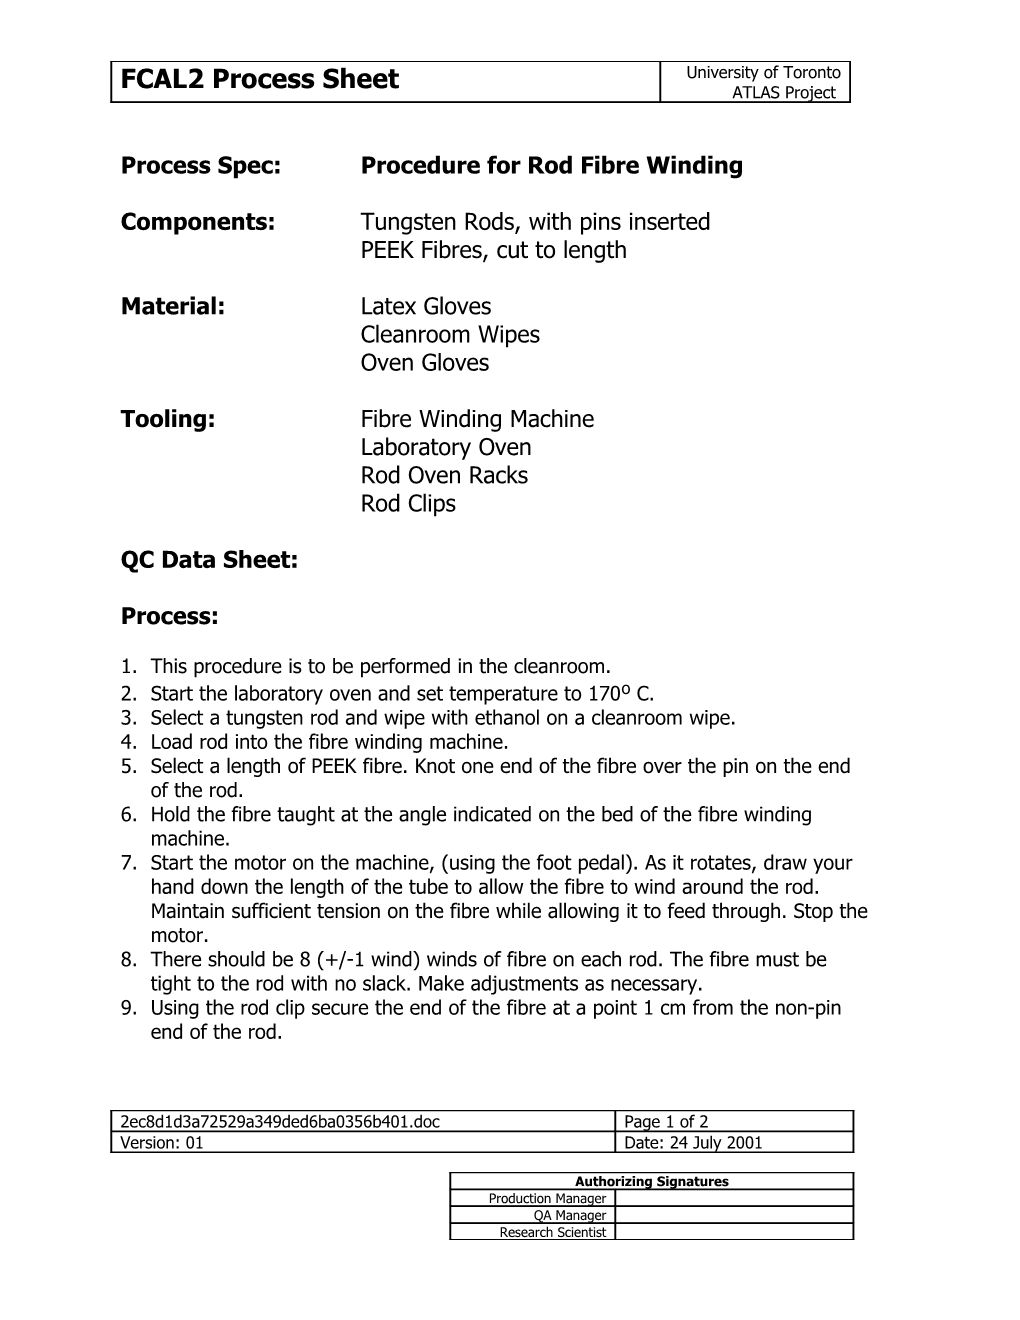 Process Spec: Procedure for Rod Fibre Winding